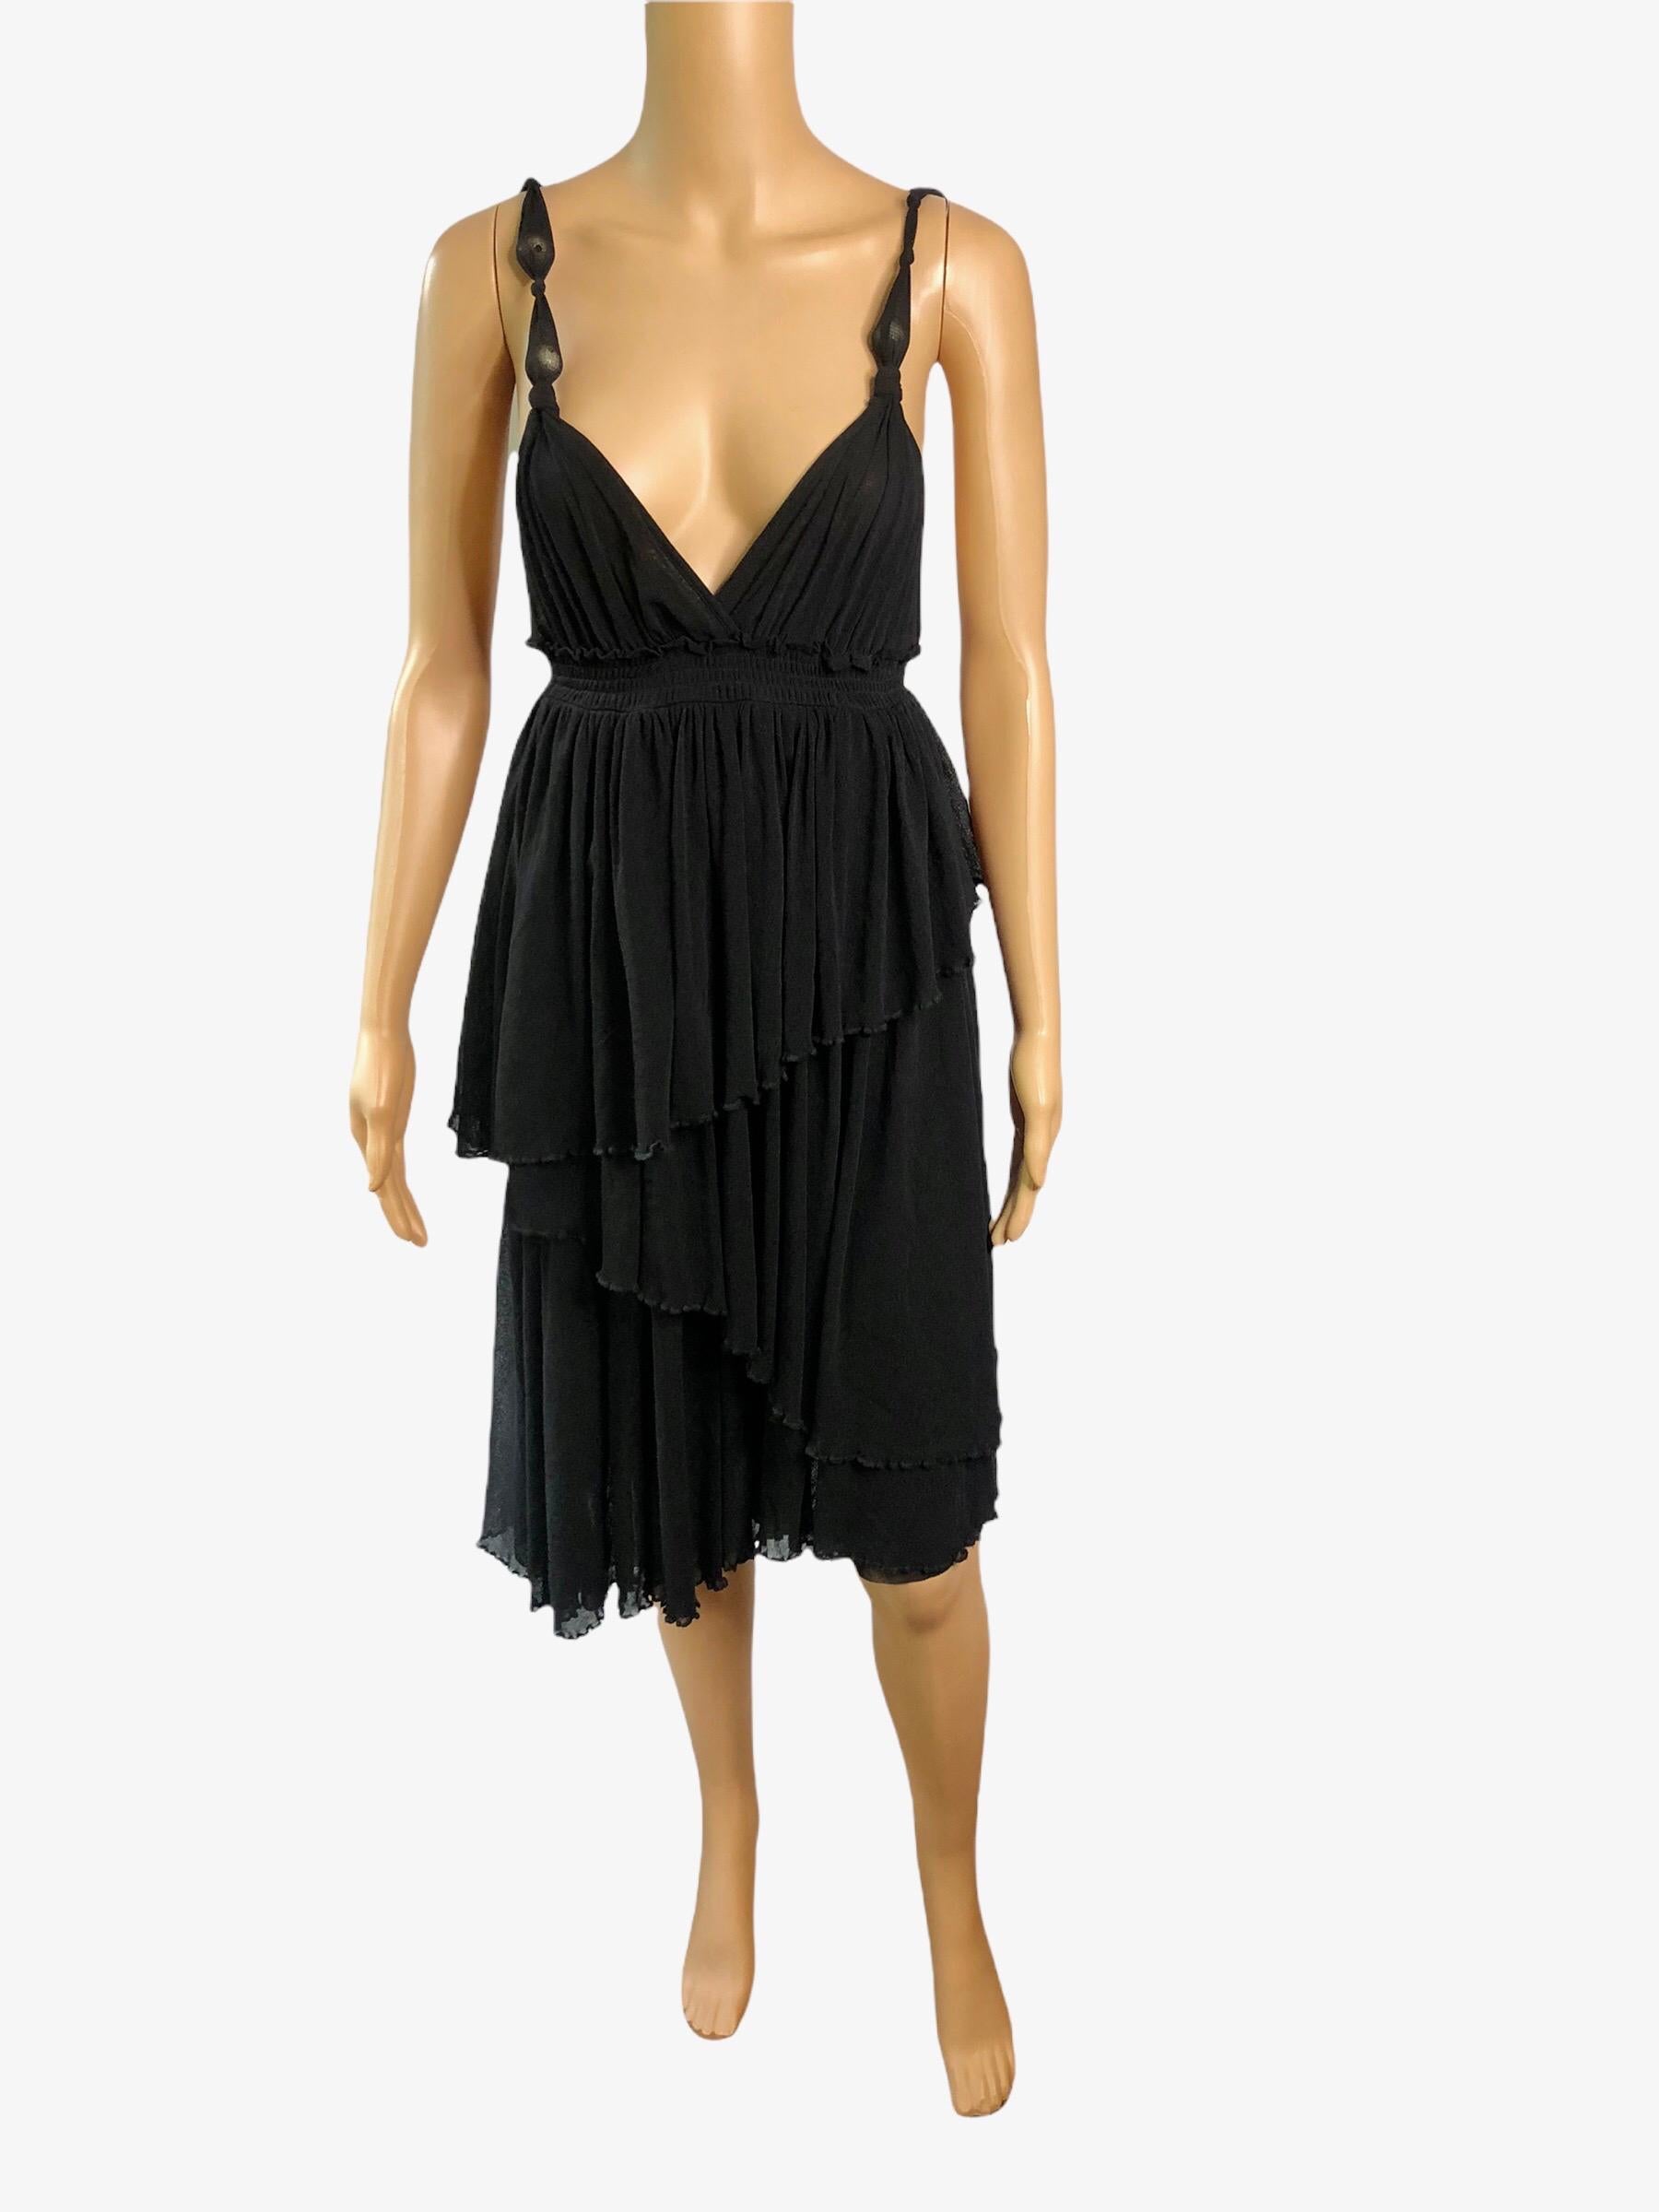 Jean Paul Gaultier Soleil Unworn Backless Semi Sheer Mesh Black Dress In New Condition For Sale In Naples, FL